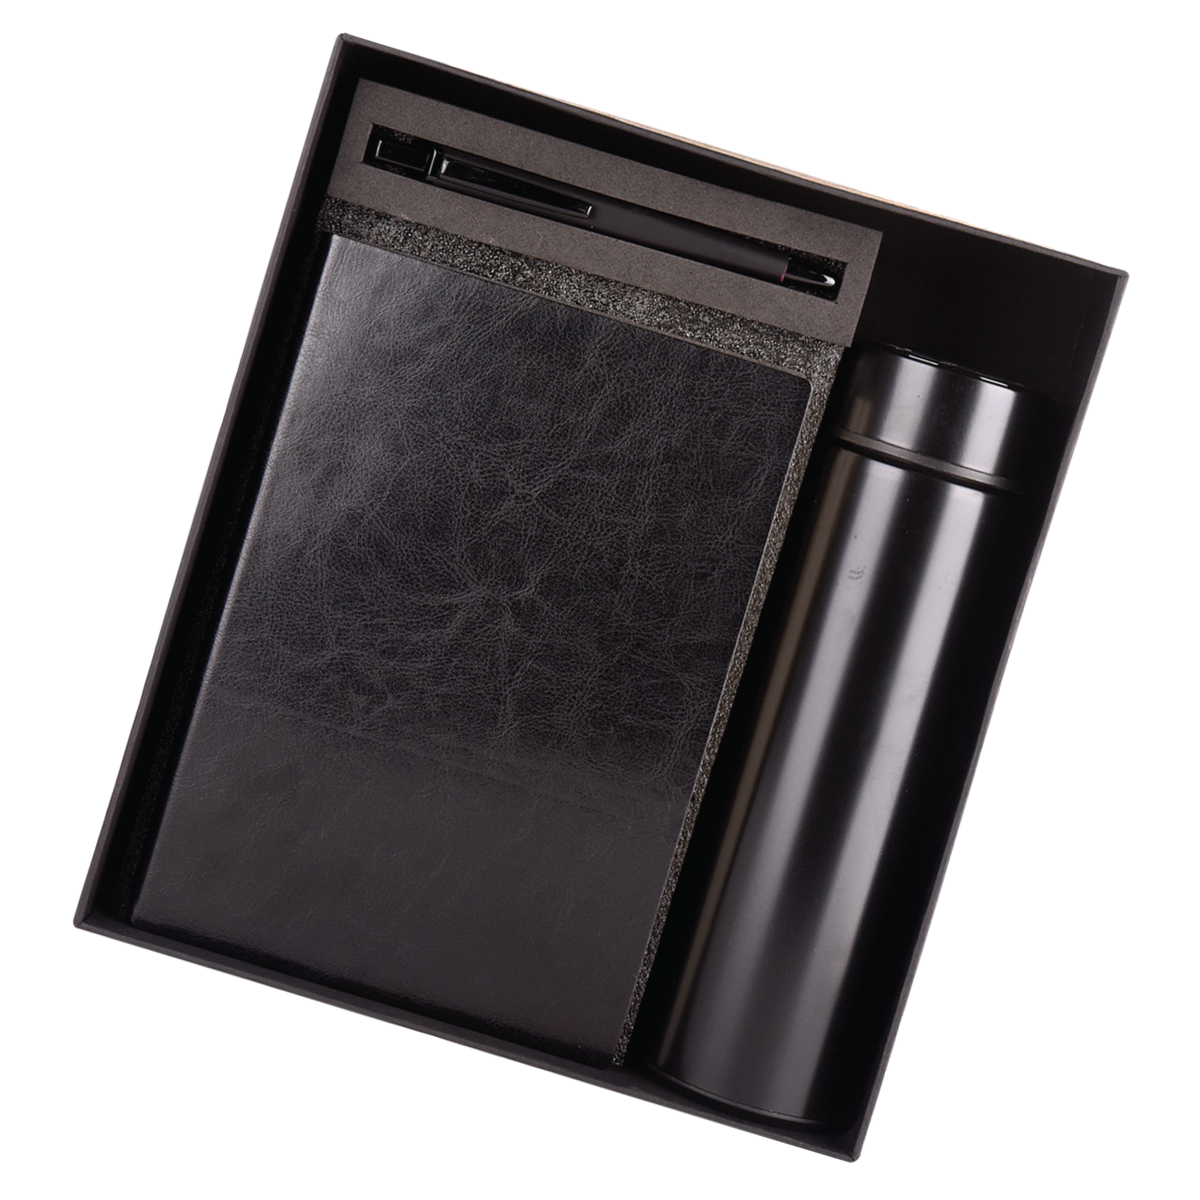 Black 3 in 1 Black Combo Gift Set Bottle, Pen, Soft Diary Notebook - For Employee Joining Kit, Corporate, Client or Dealer Gifting HK37377